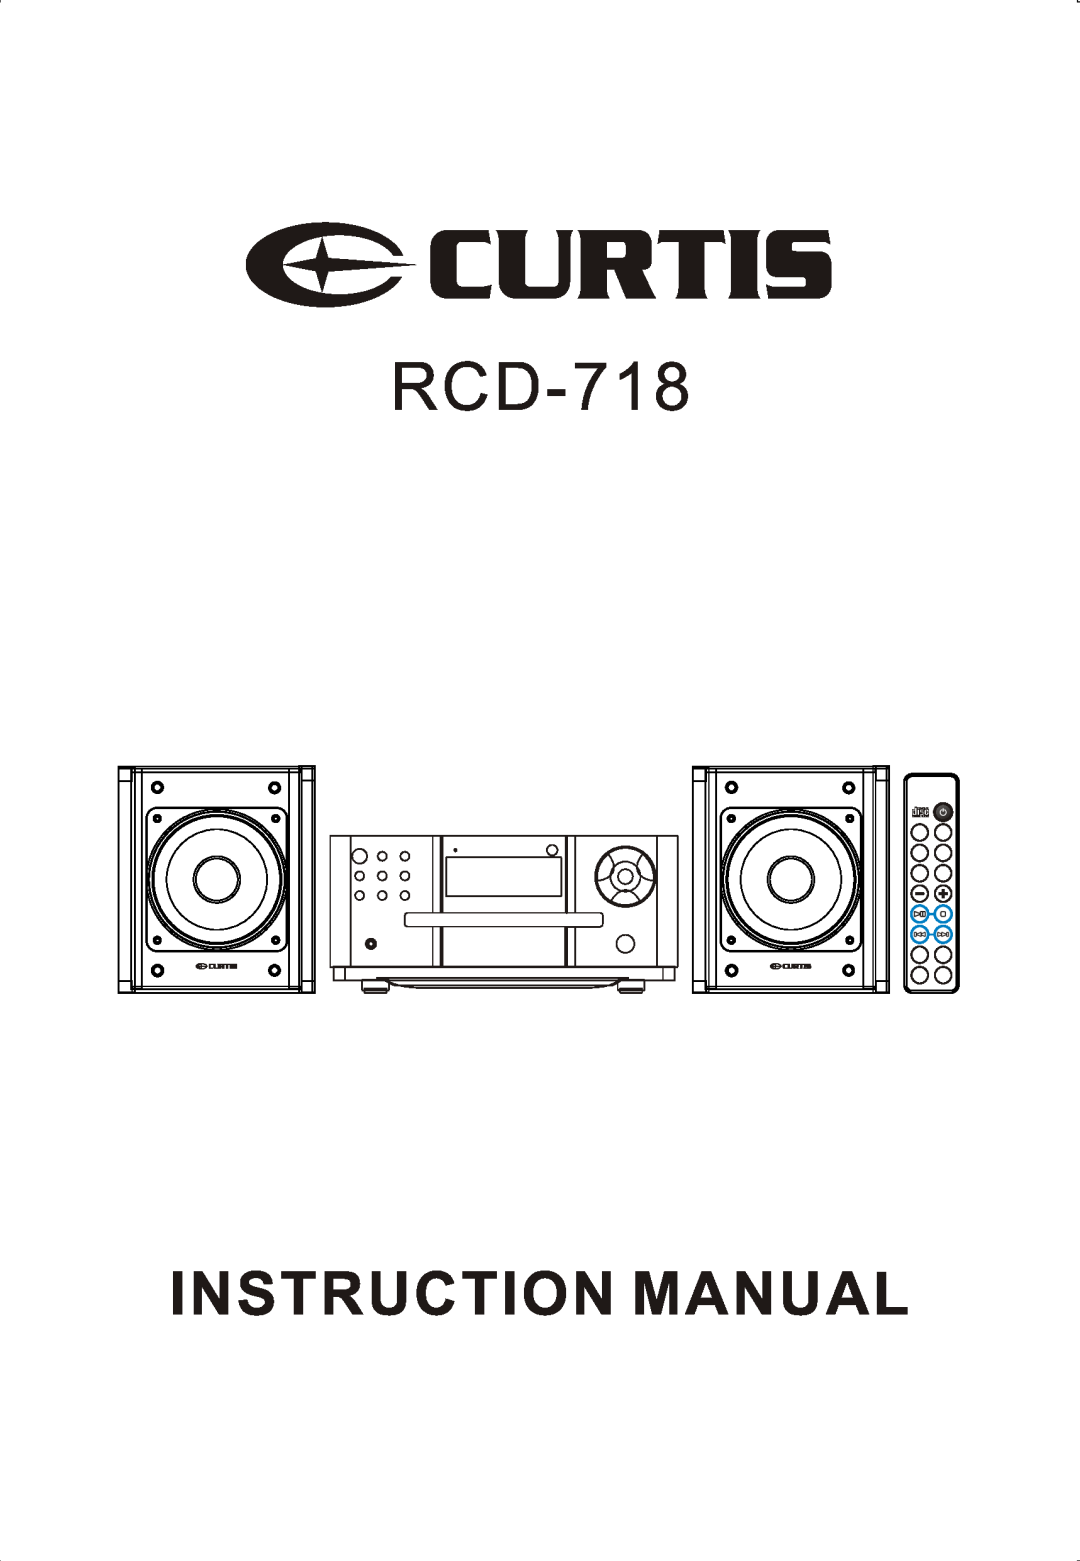 Curtis RCD-718 instruction manual 